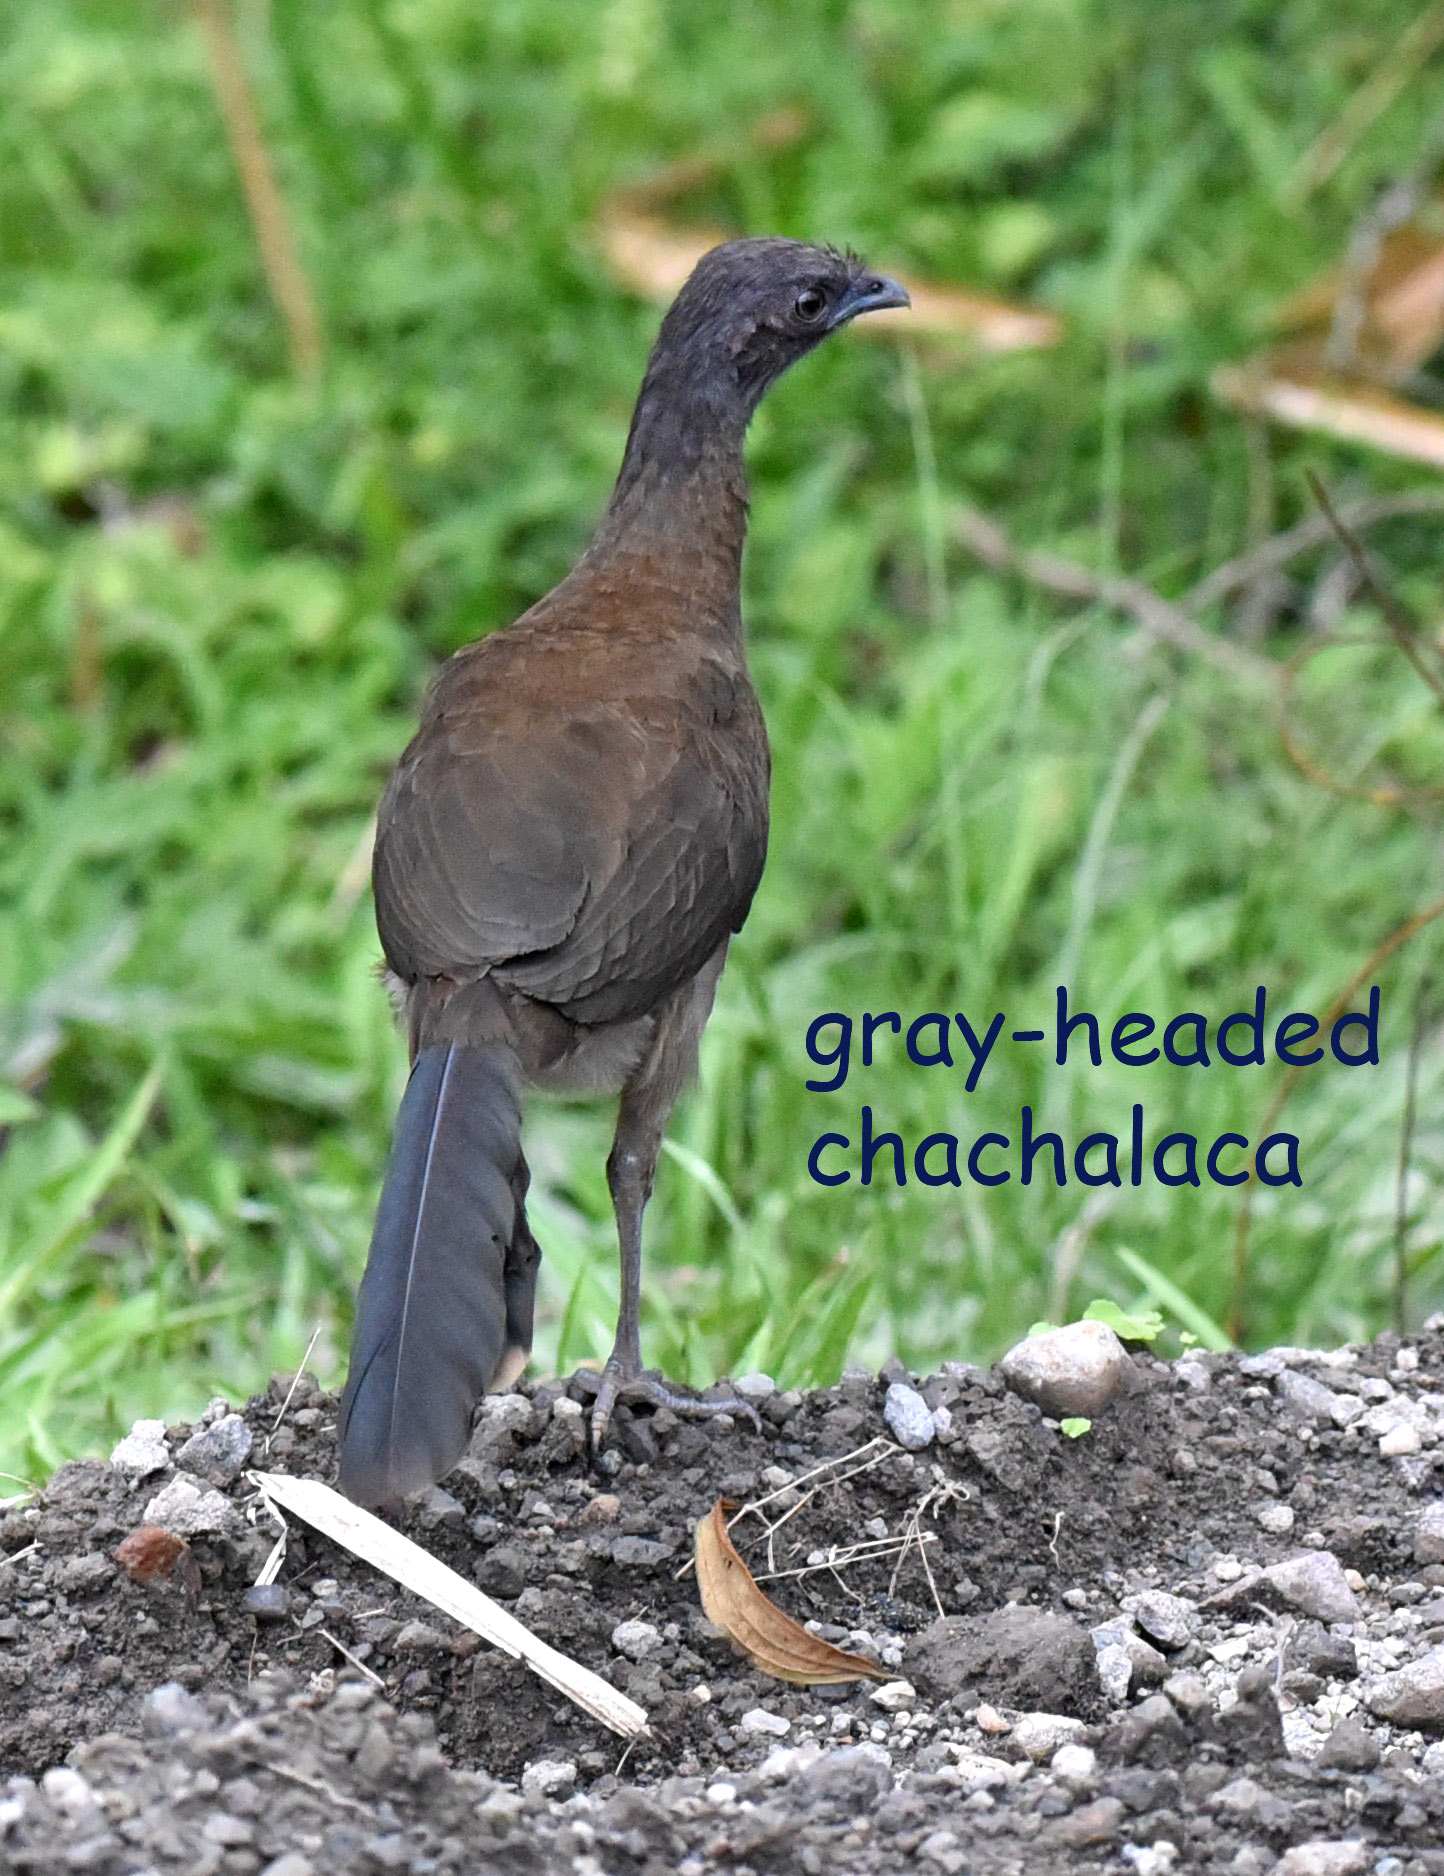 DSC_6155 gray-headed chachalaca